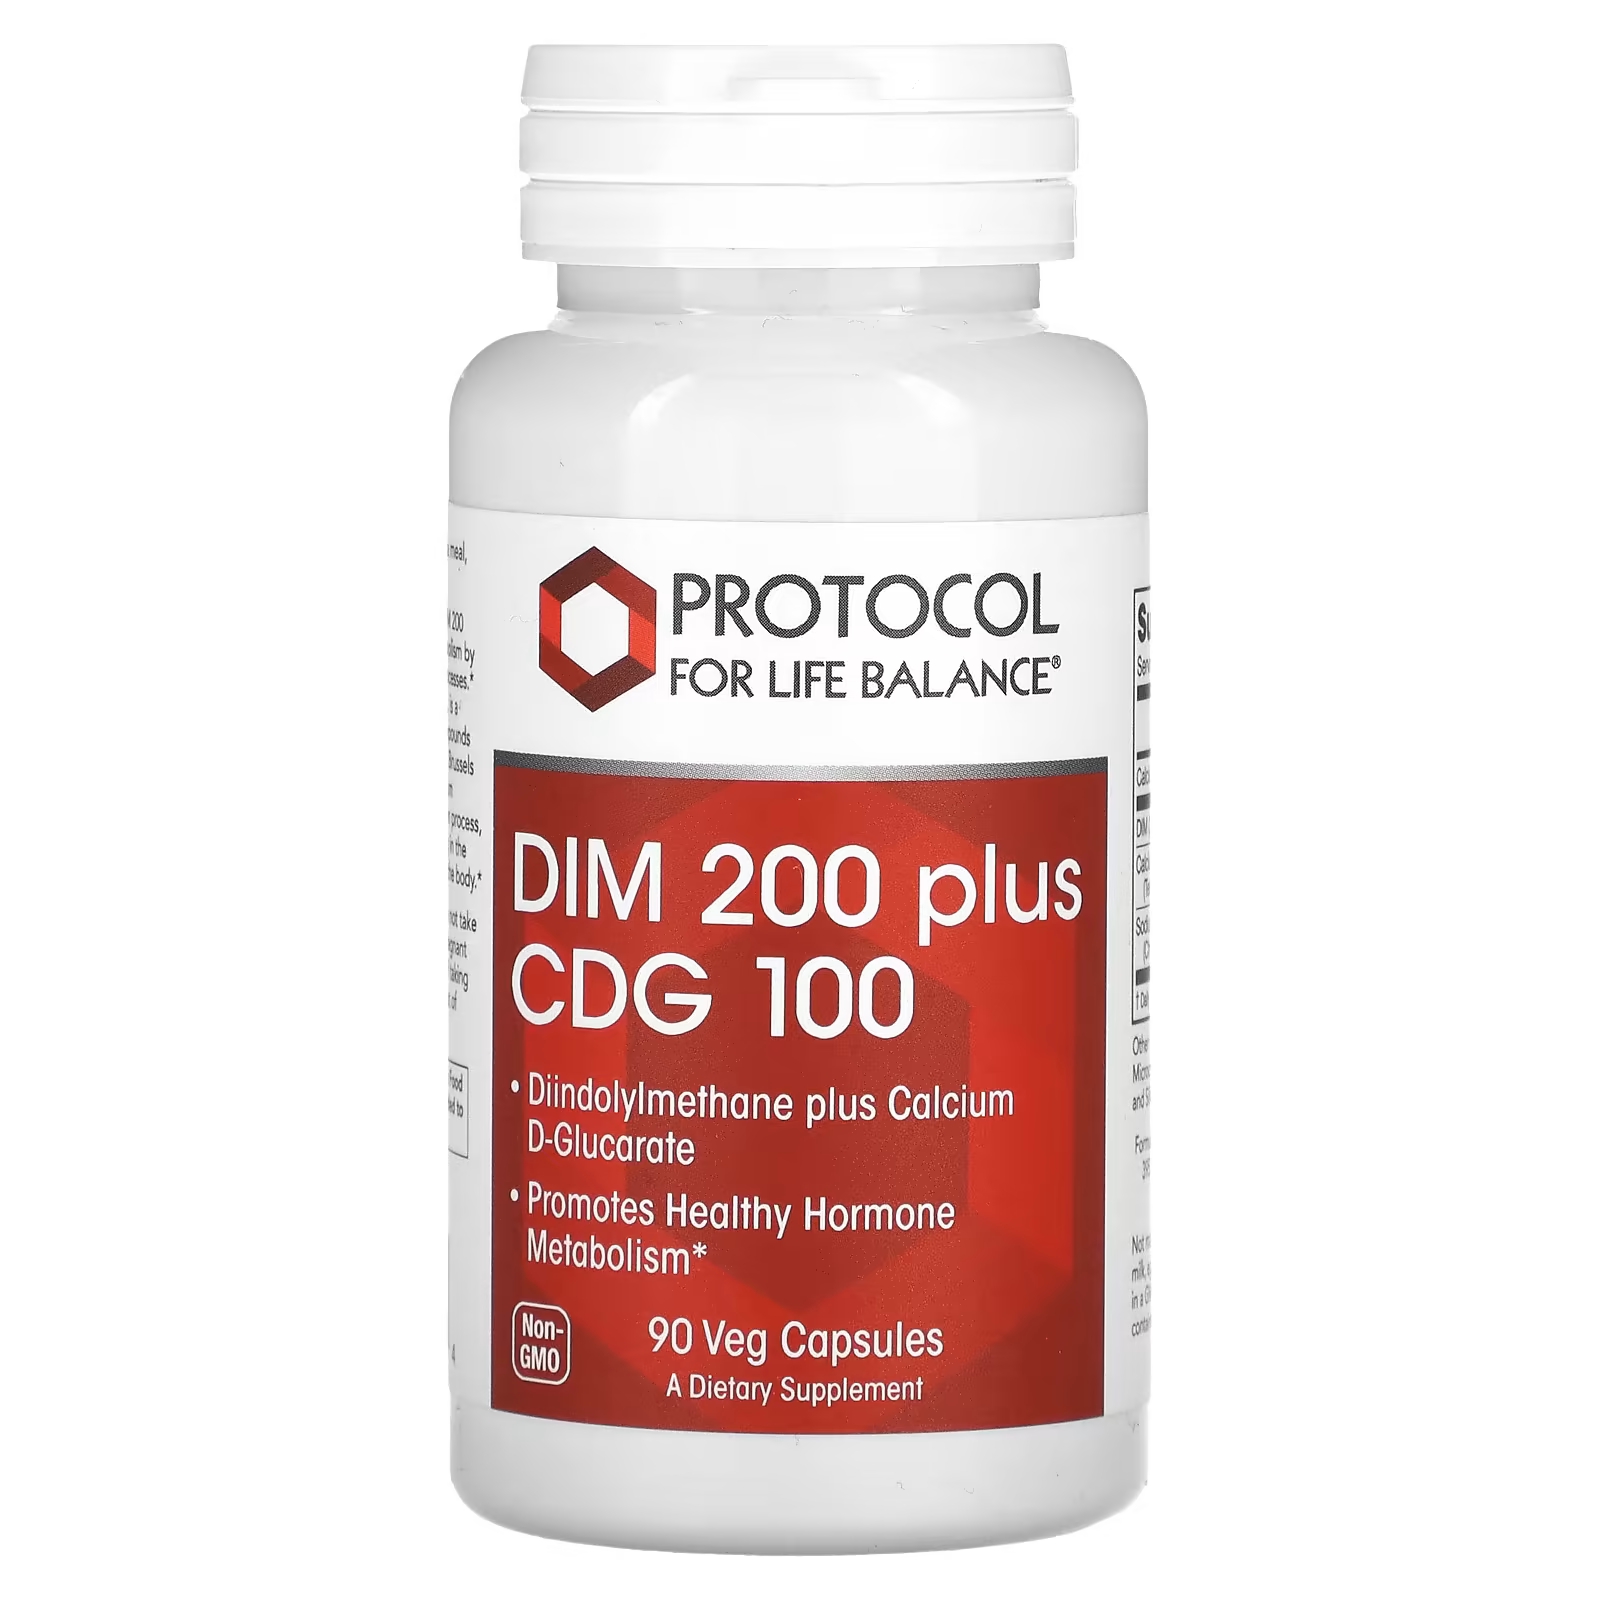 Пищевая добавка Protocol for Life Balance DIM 200 Plus CDG 100, 90 капсул